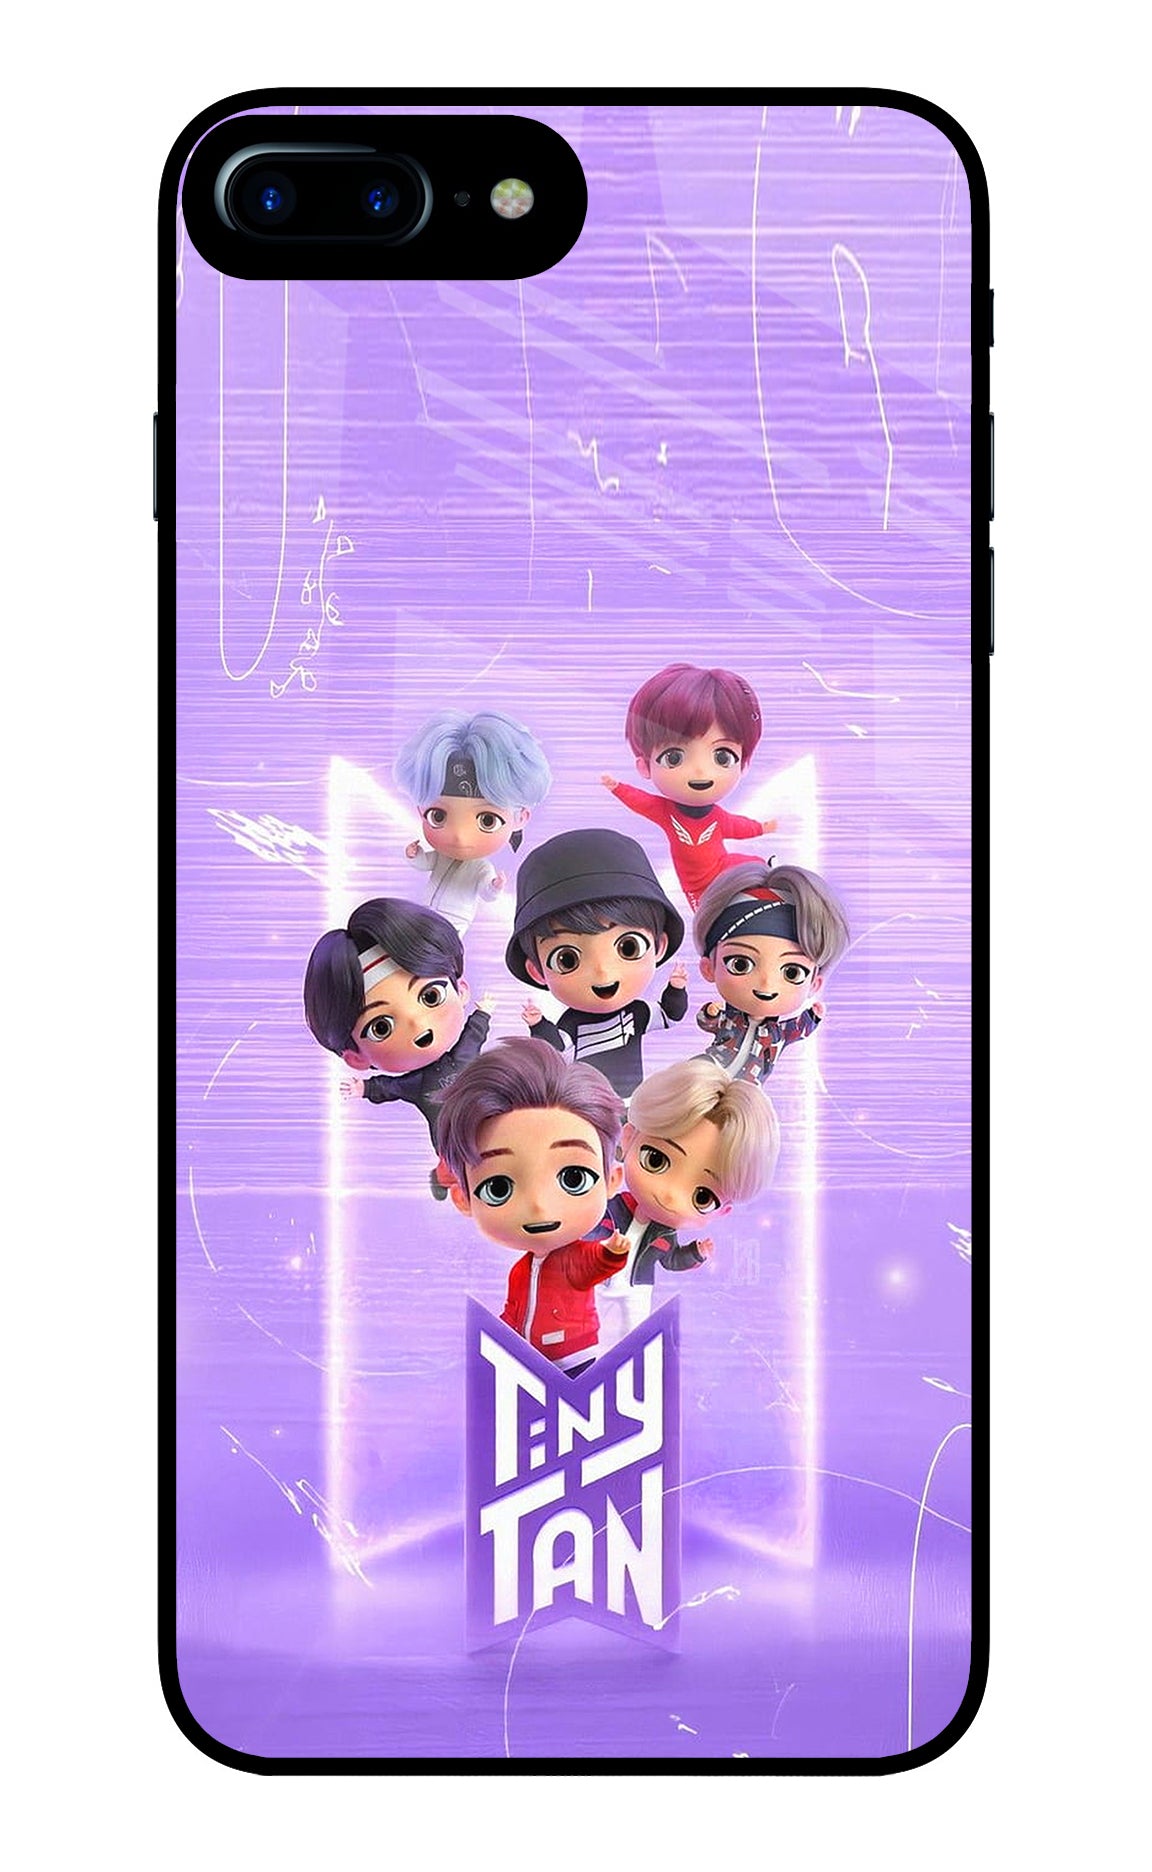 BTS Tiny Tan iPhone 7 Plus Glass Case